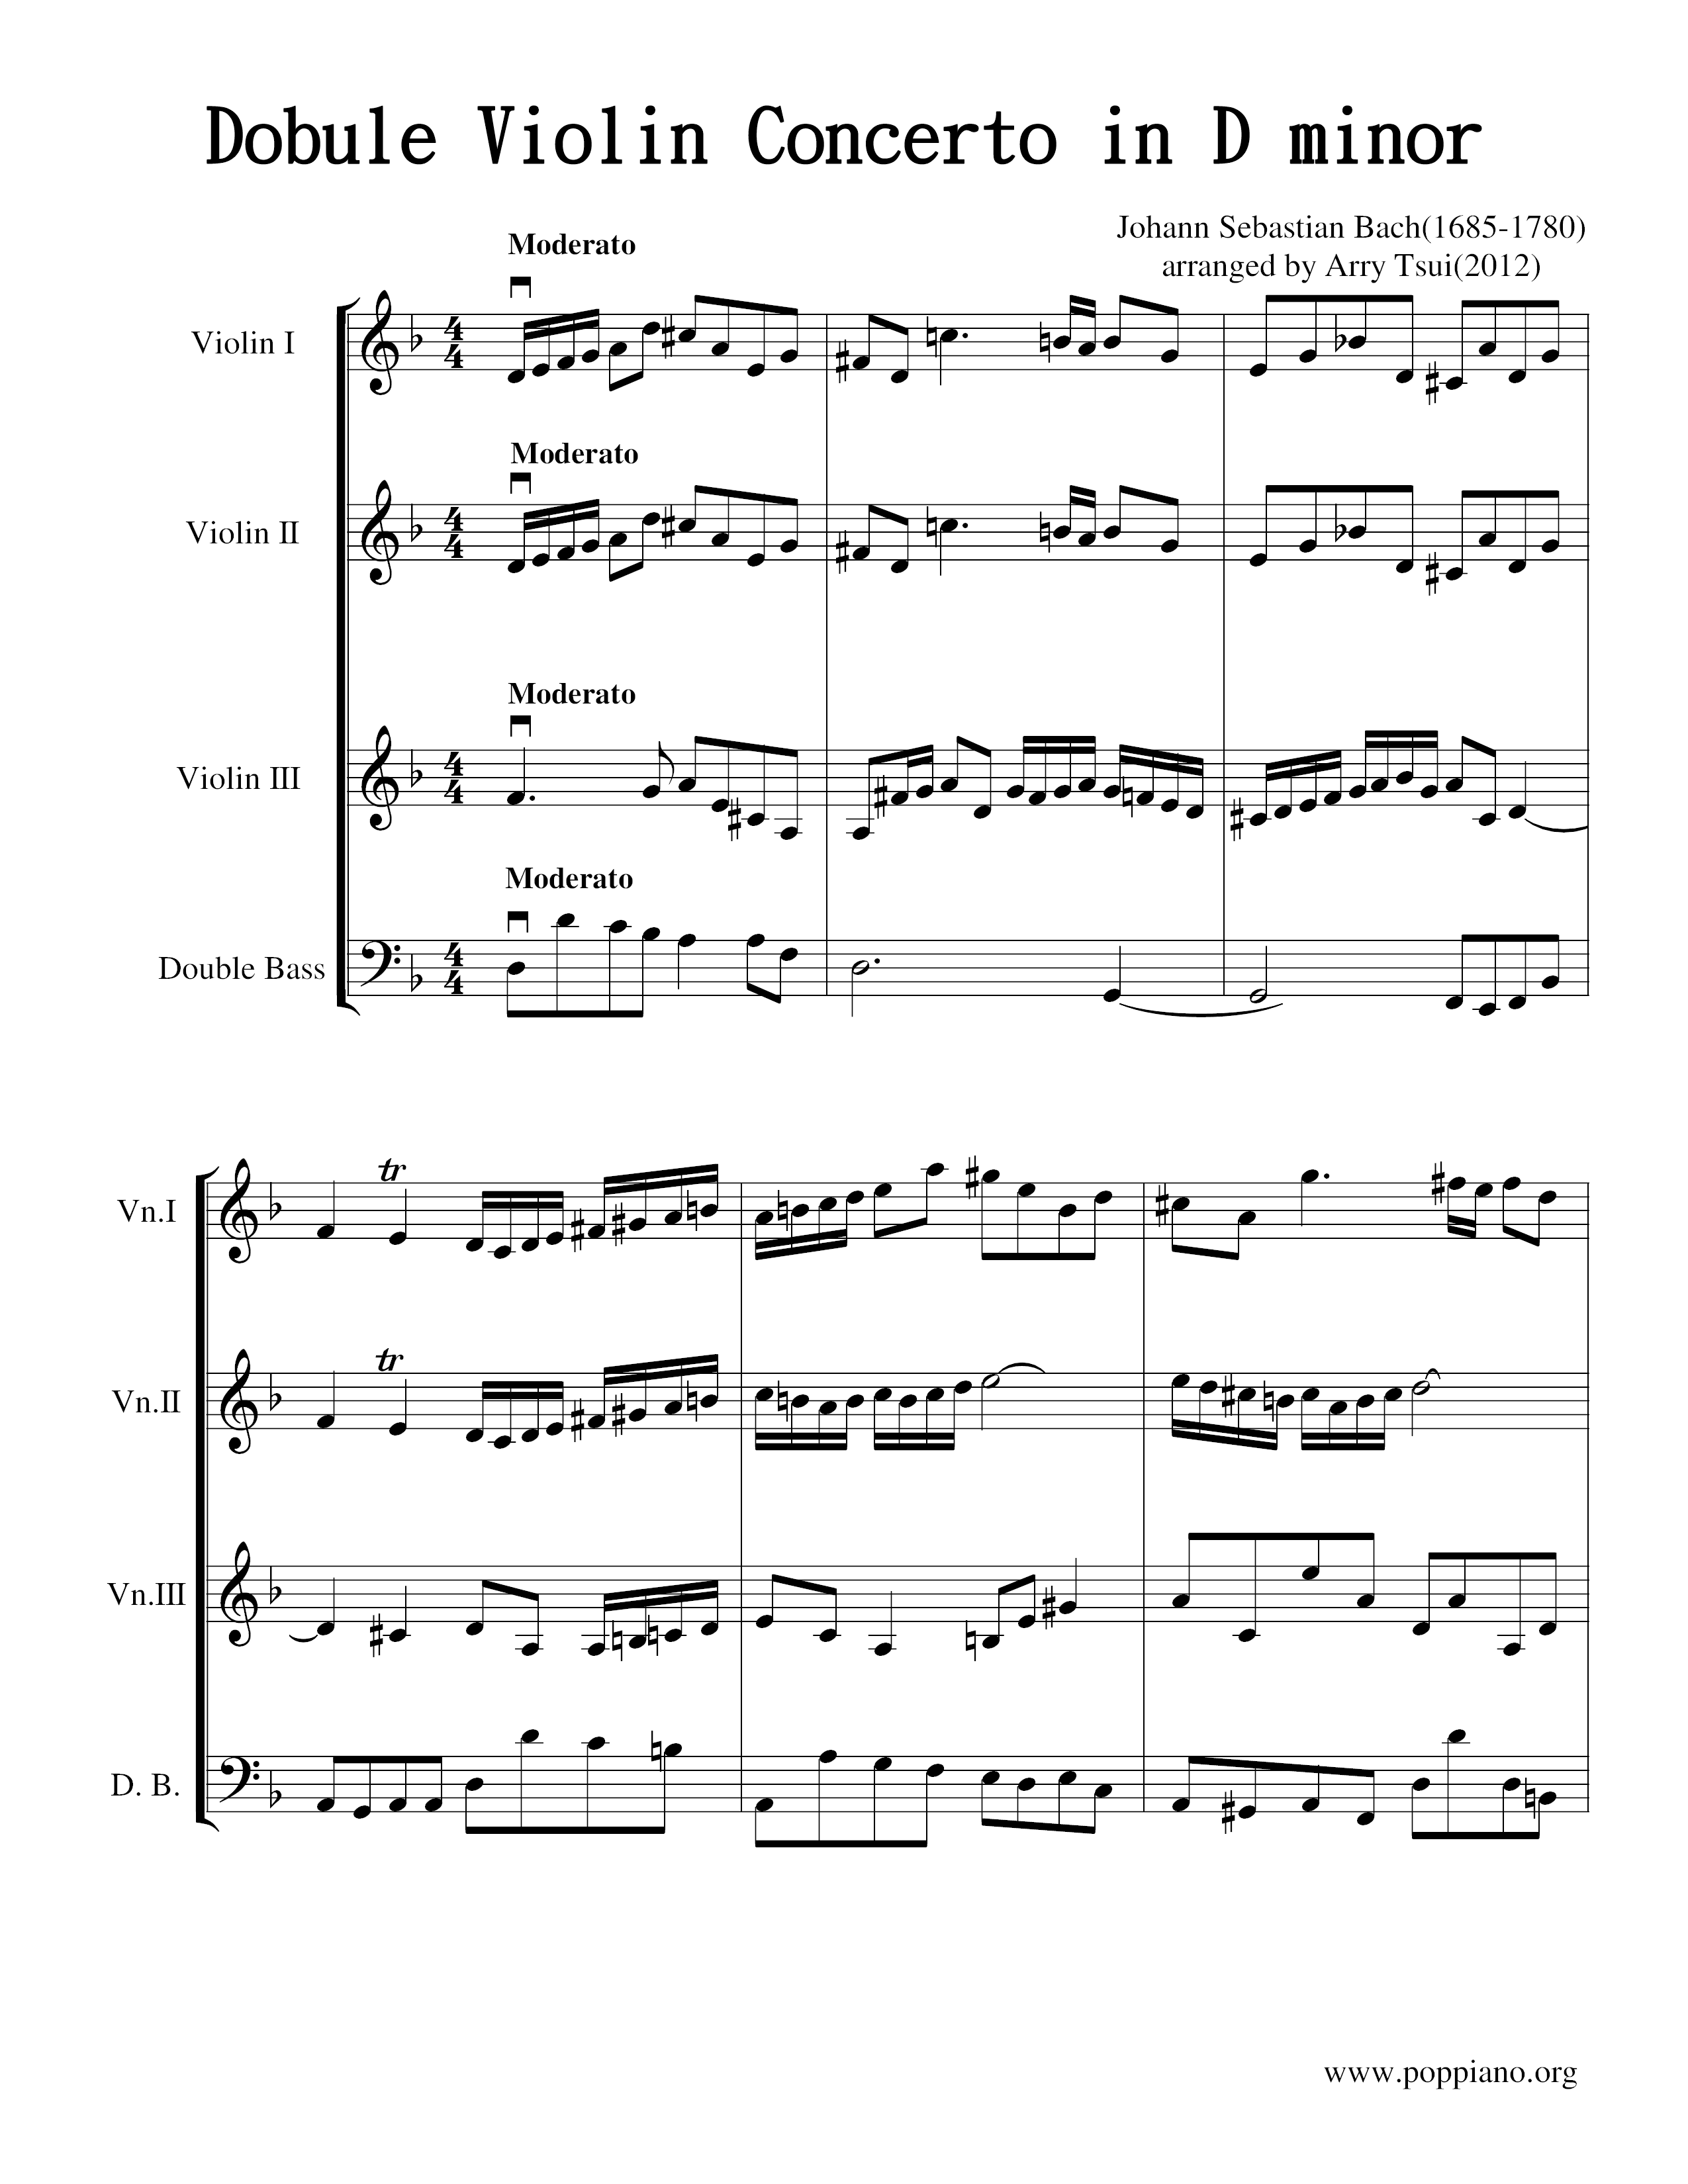 Dobule Violin Concerto in D minor NO.1 Score